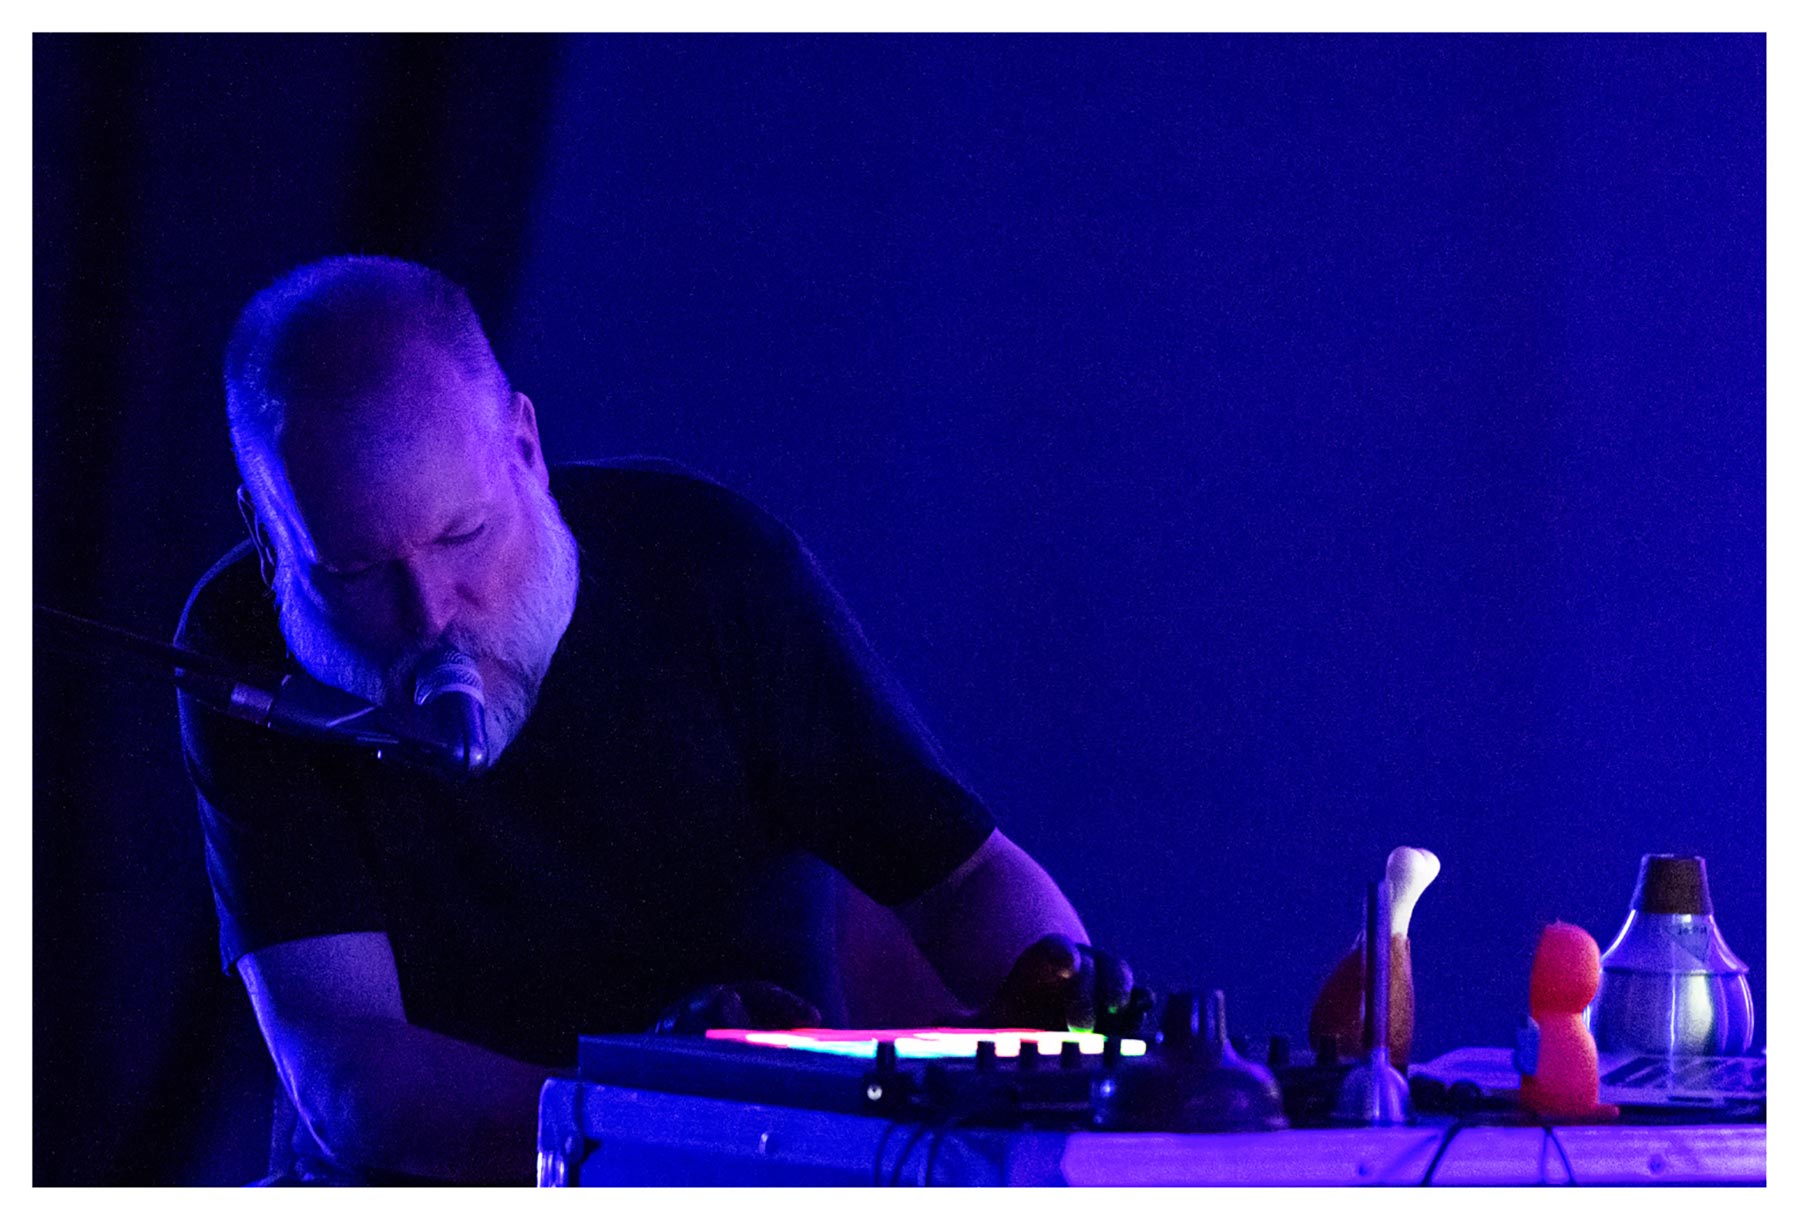 Jeff Kaiser at the Bernaola Music Festival, Artium, Vitoria-Gasteiz, Spain